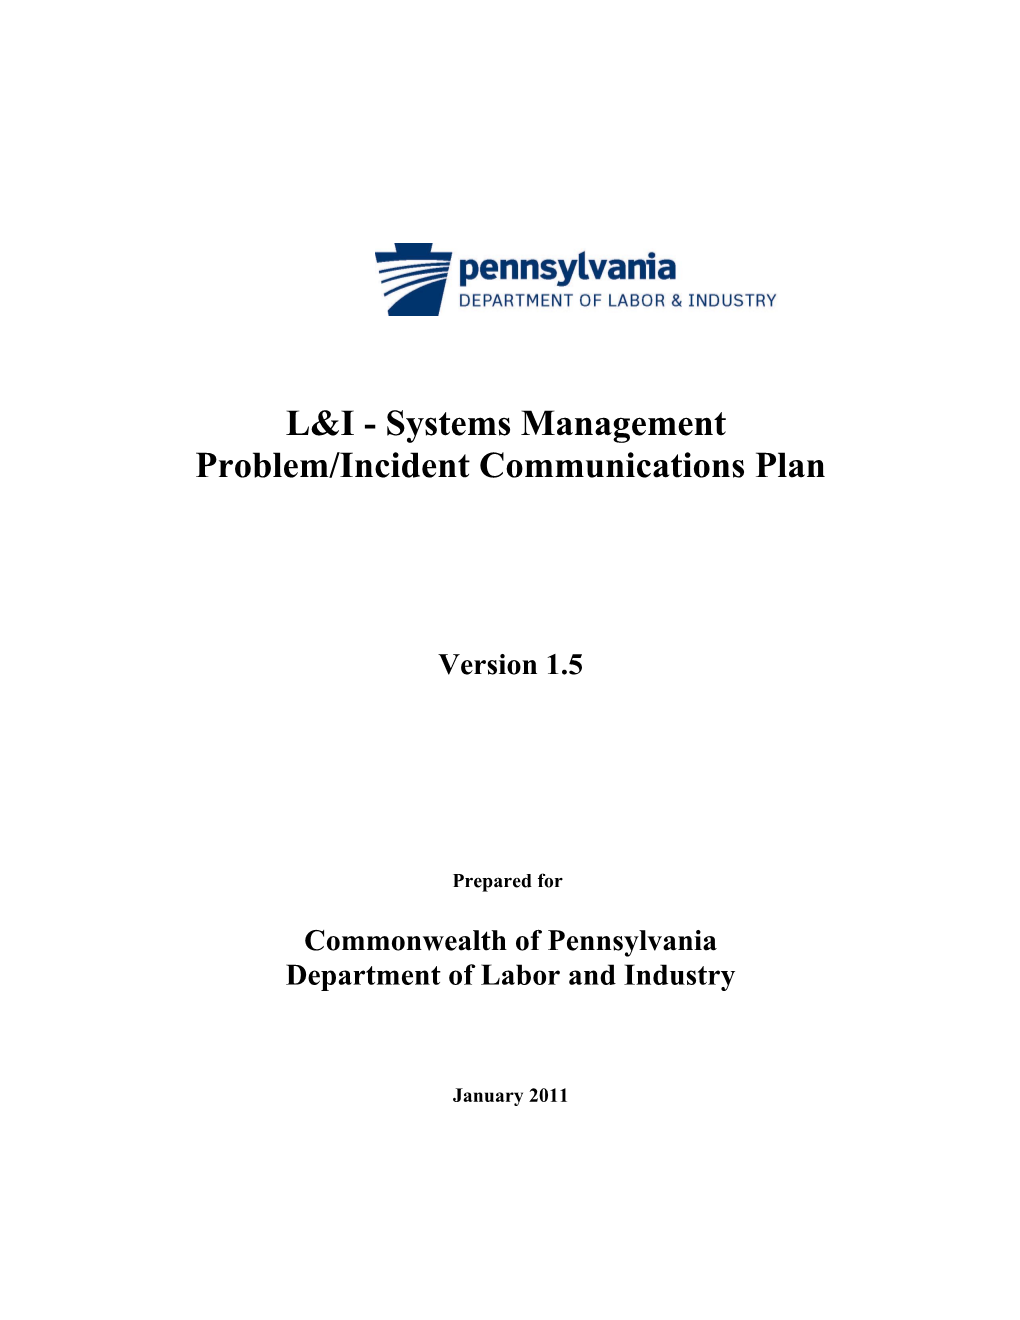 Problem/Incident Communications Plan